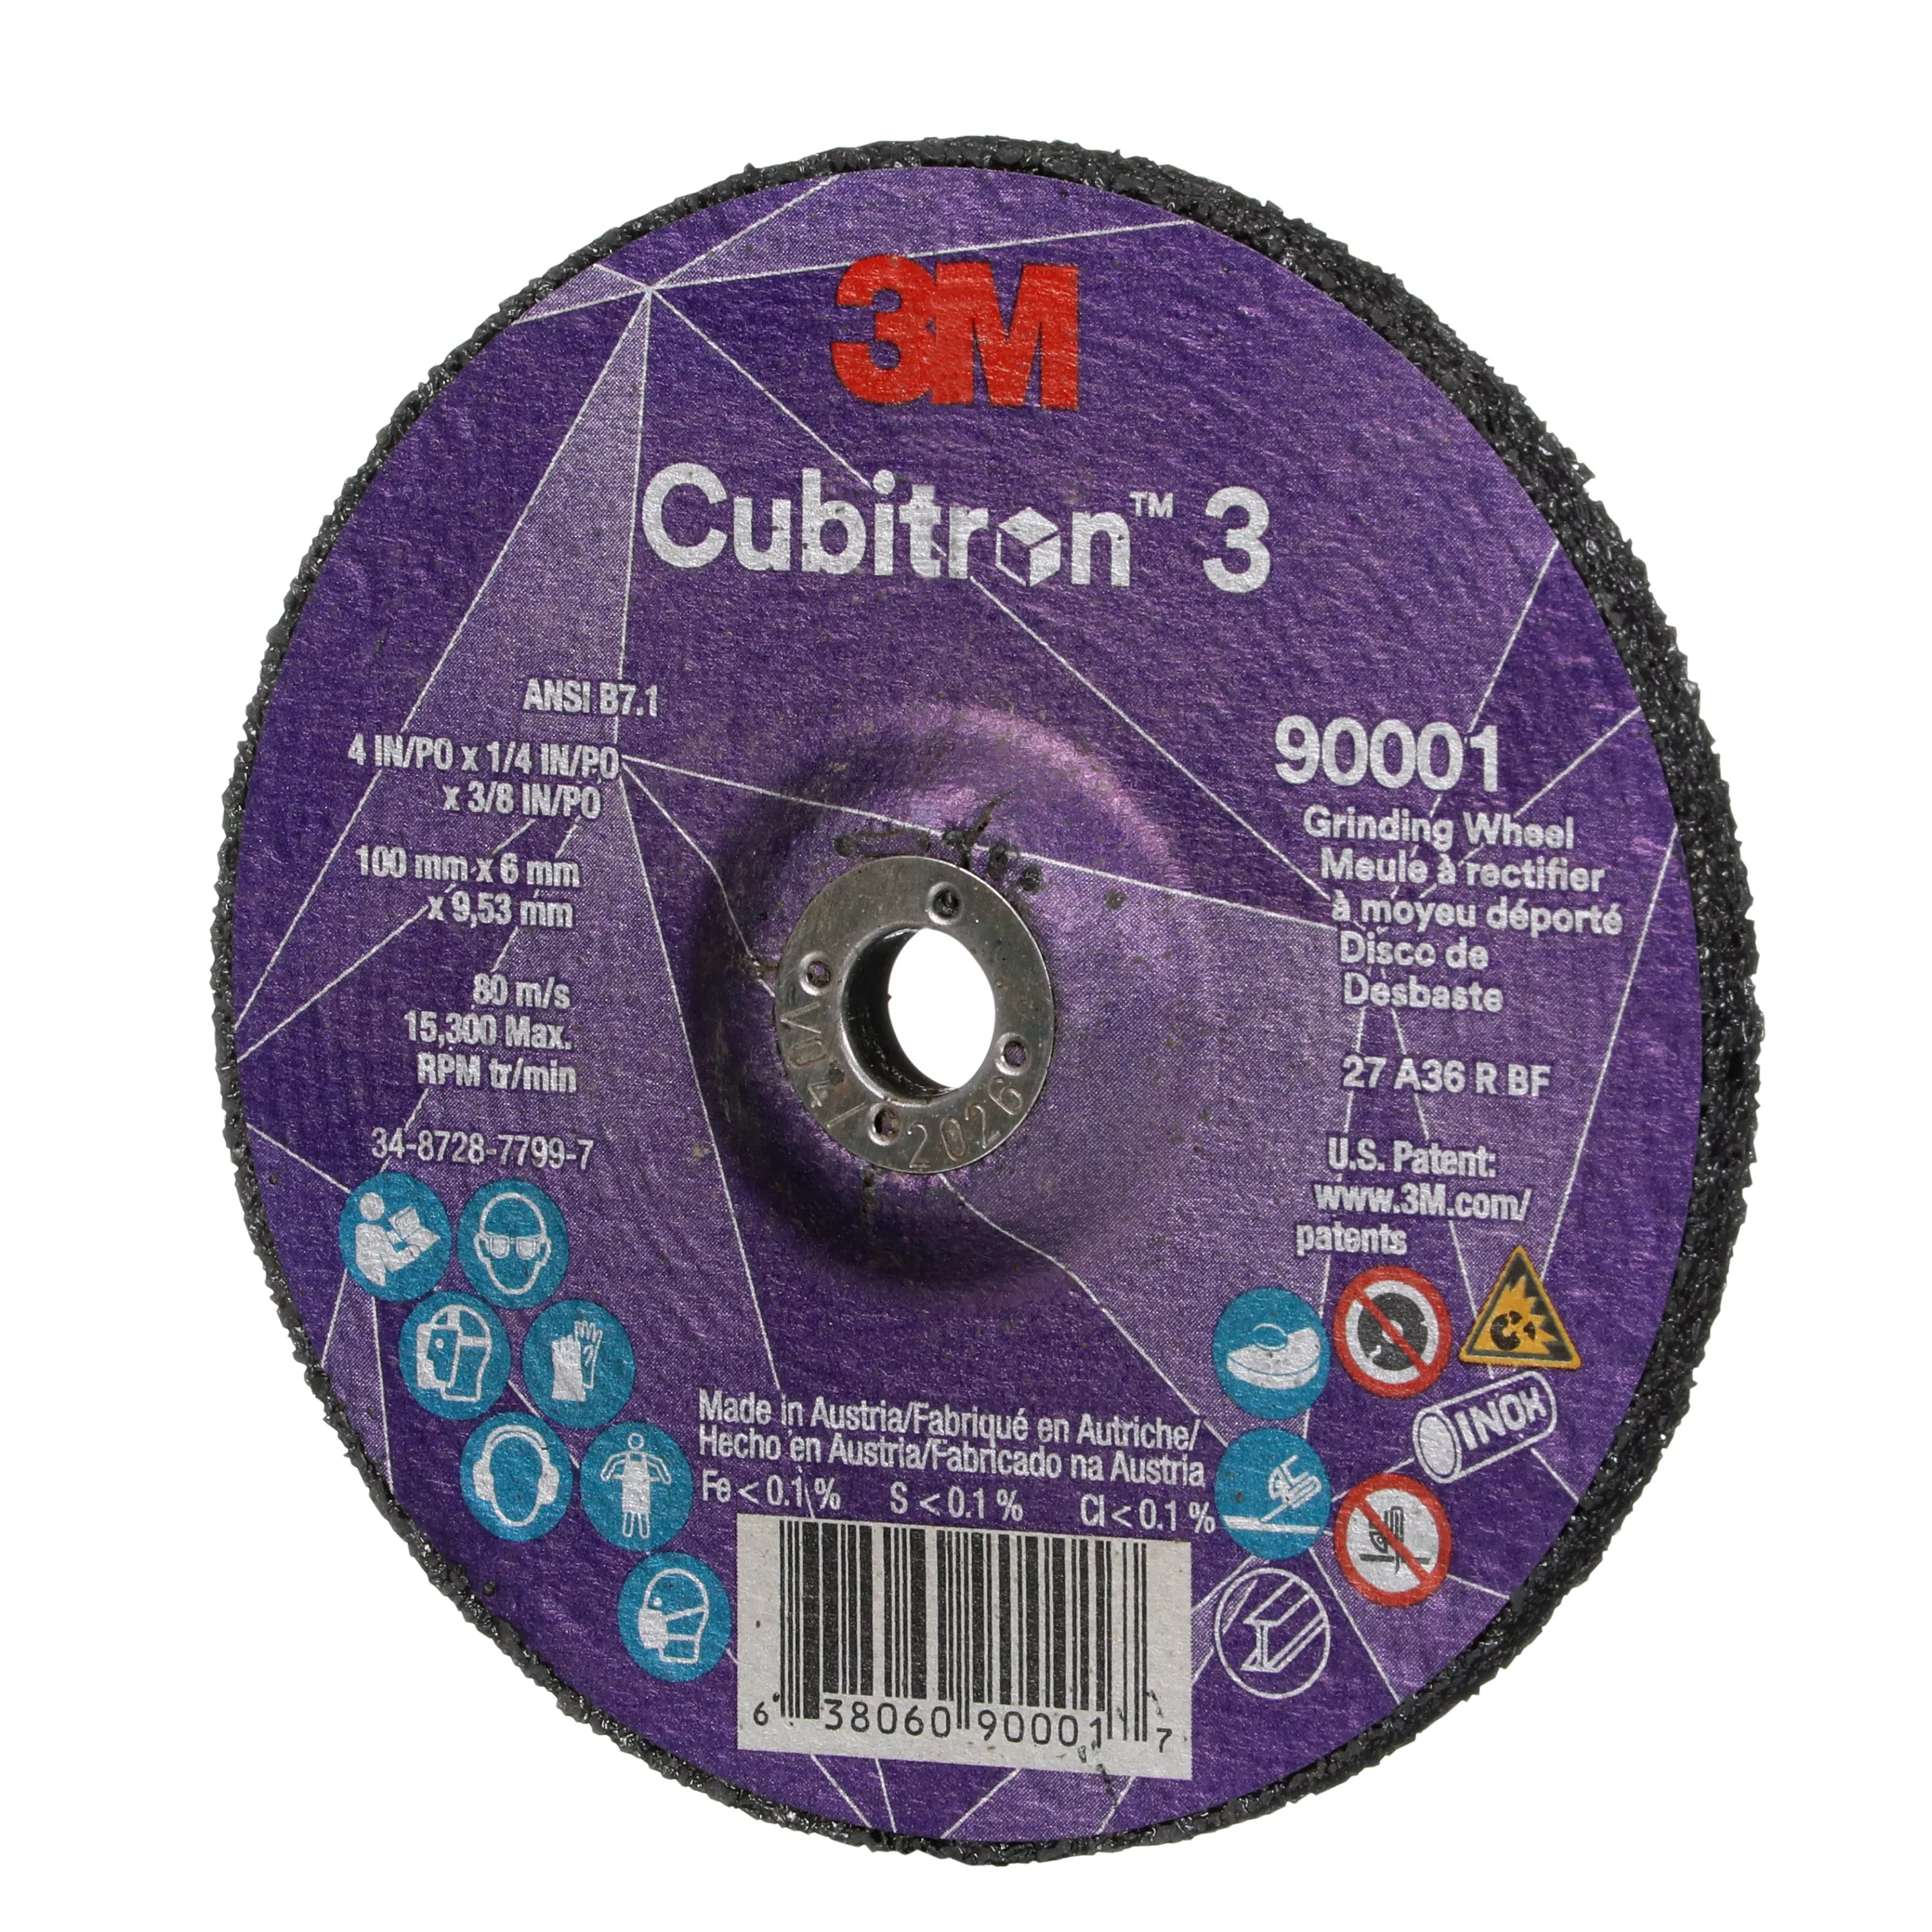 SKU 7100303965 | 3M™ Cubitron™ 3 Depressed Center Grinding Wheel